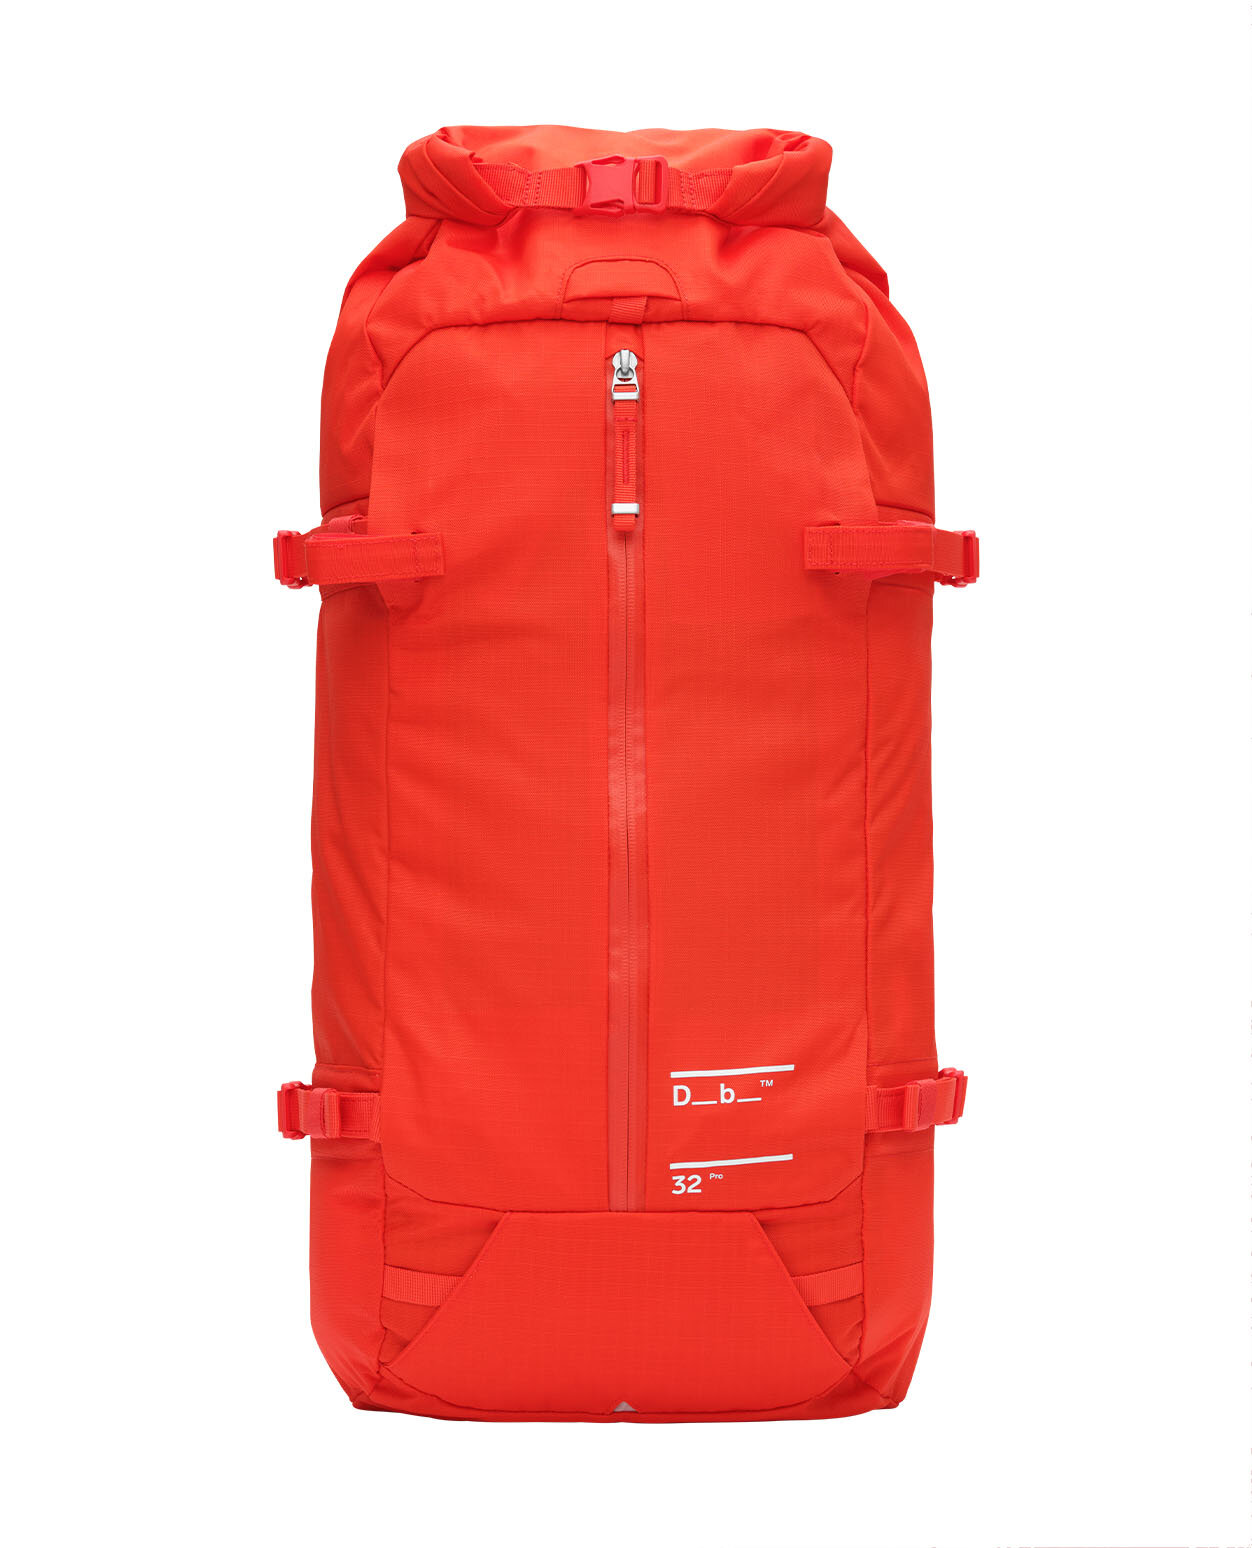 D_b_ Snow Pro Backpack 32L Falu Red